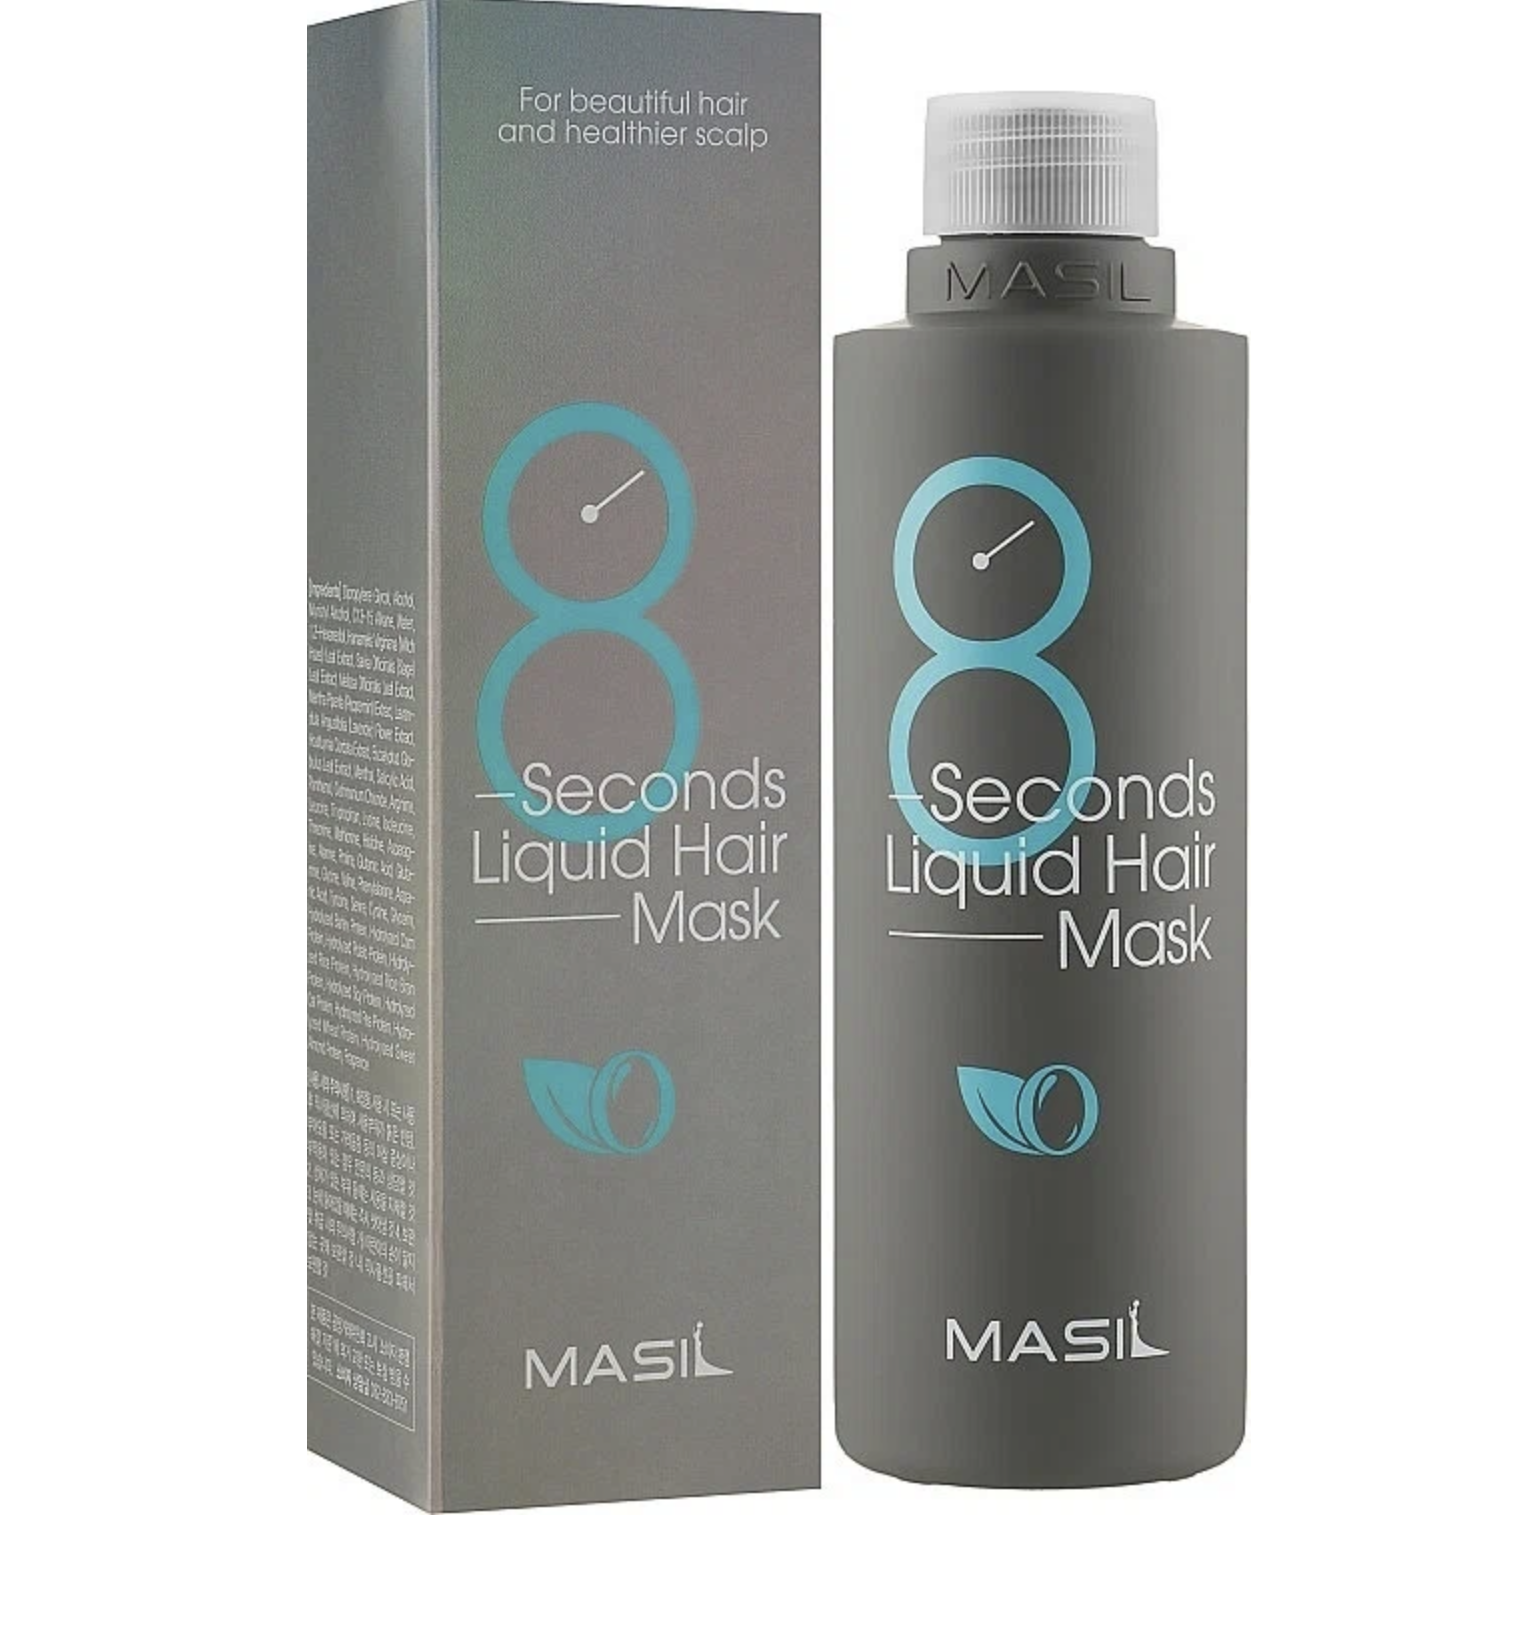   / Masil - -     8 Seconds Liquid Hair Mask 100 